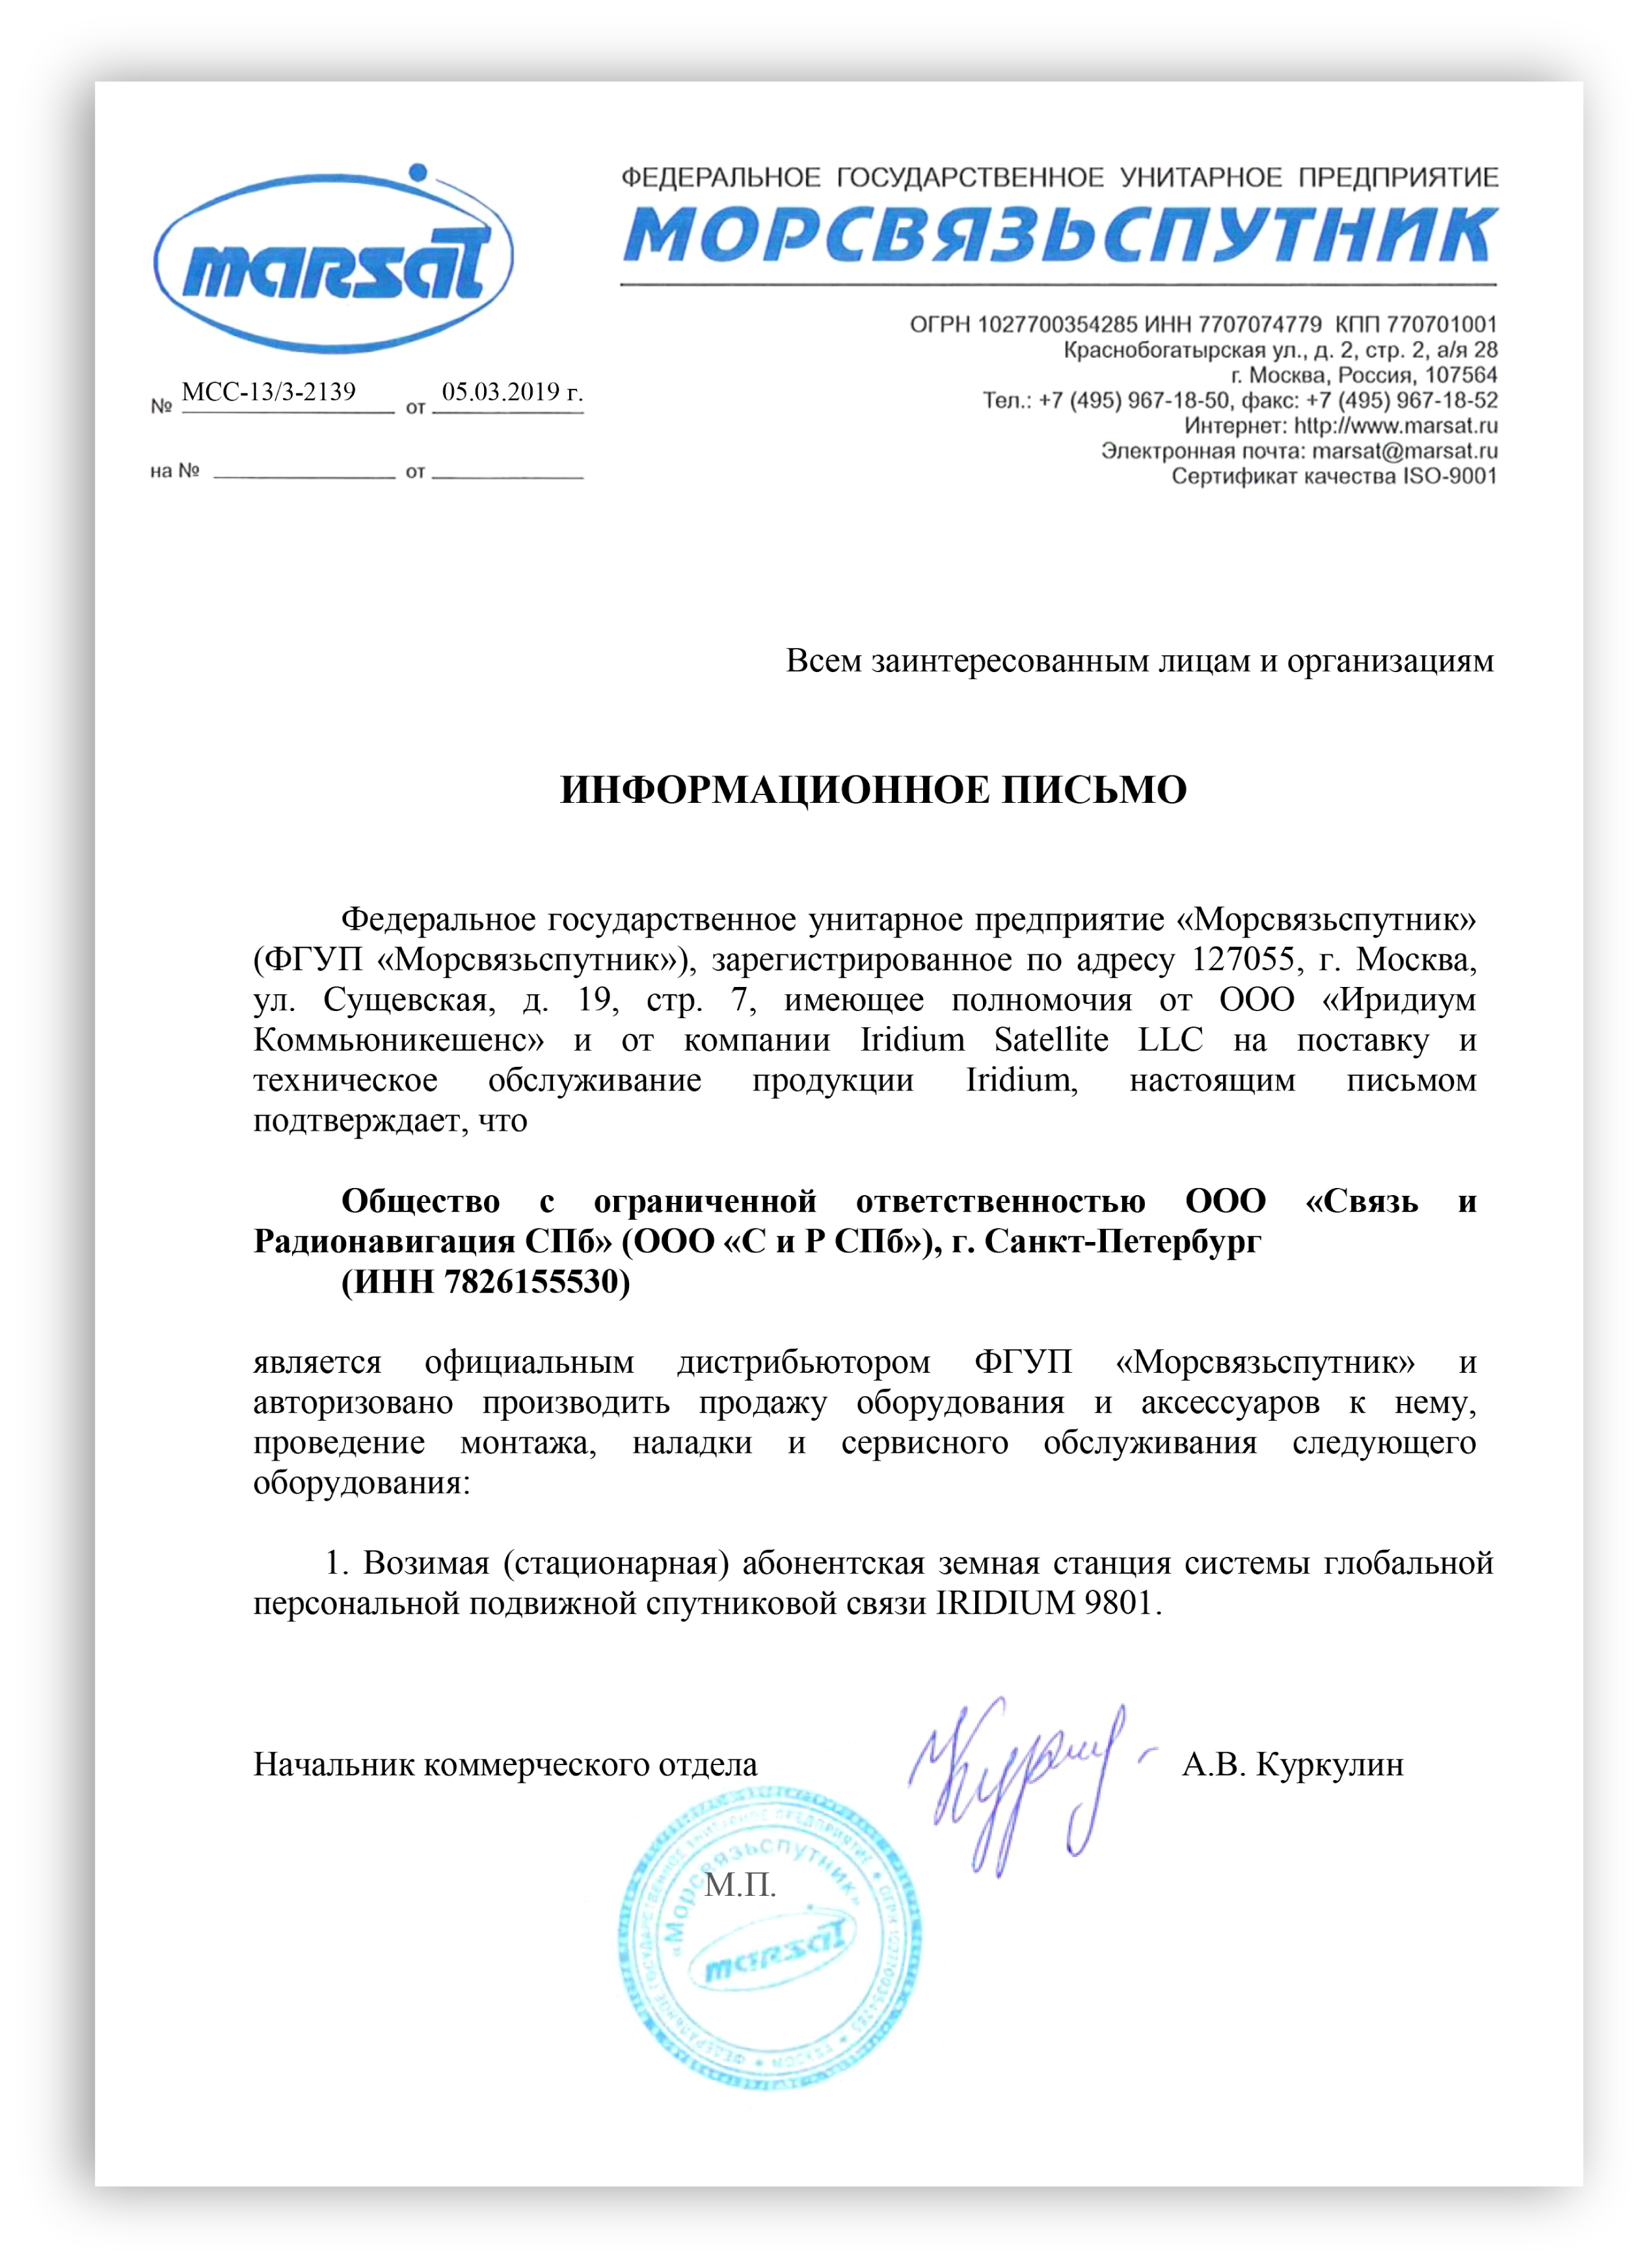 Письмо ФГУП Морсвязьспутник (аккредитация IRIDIUM)